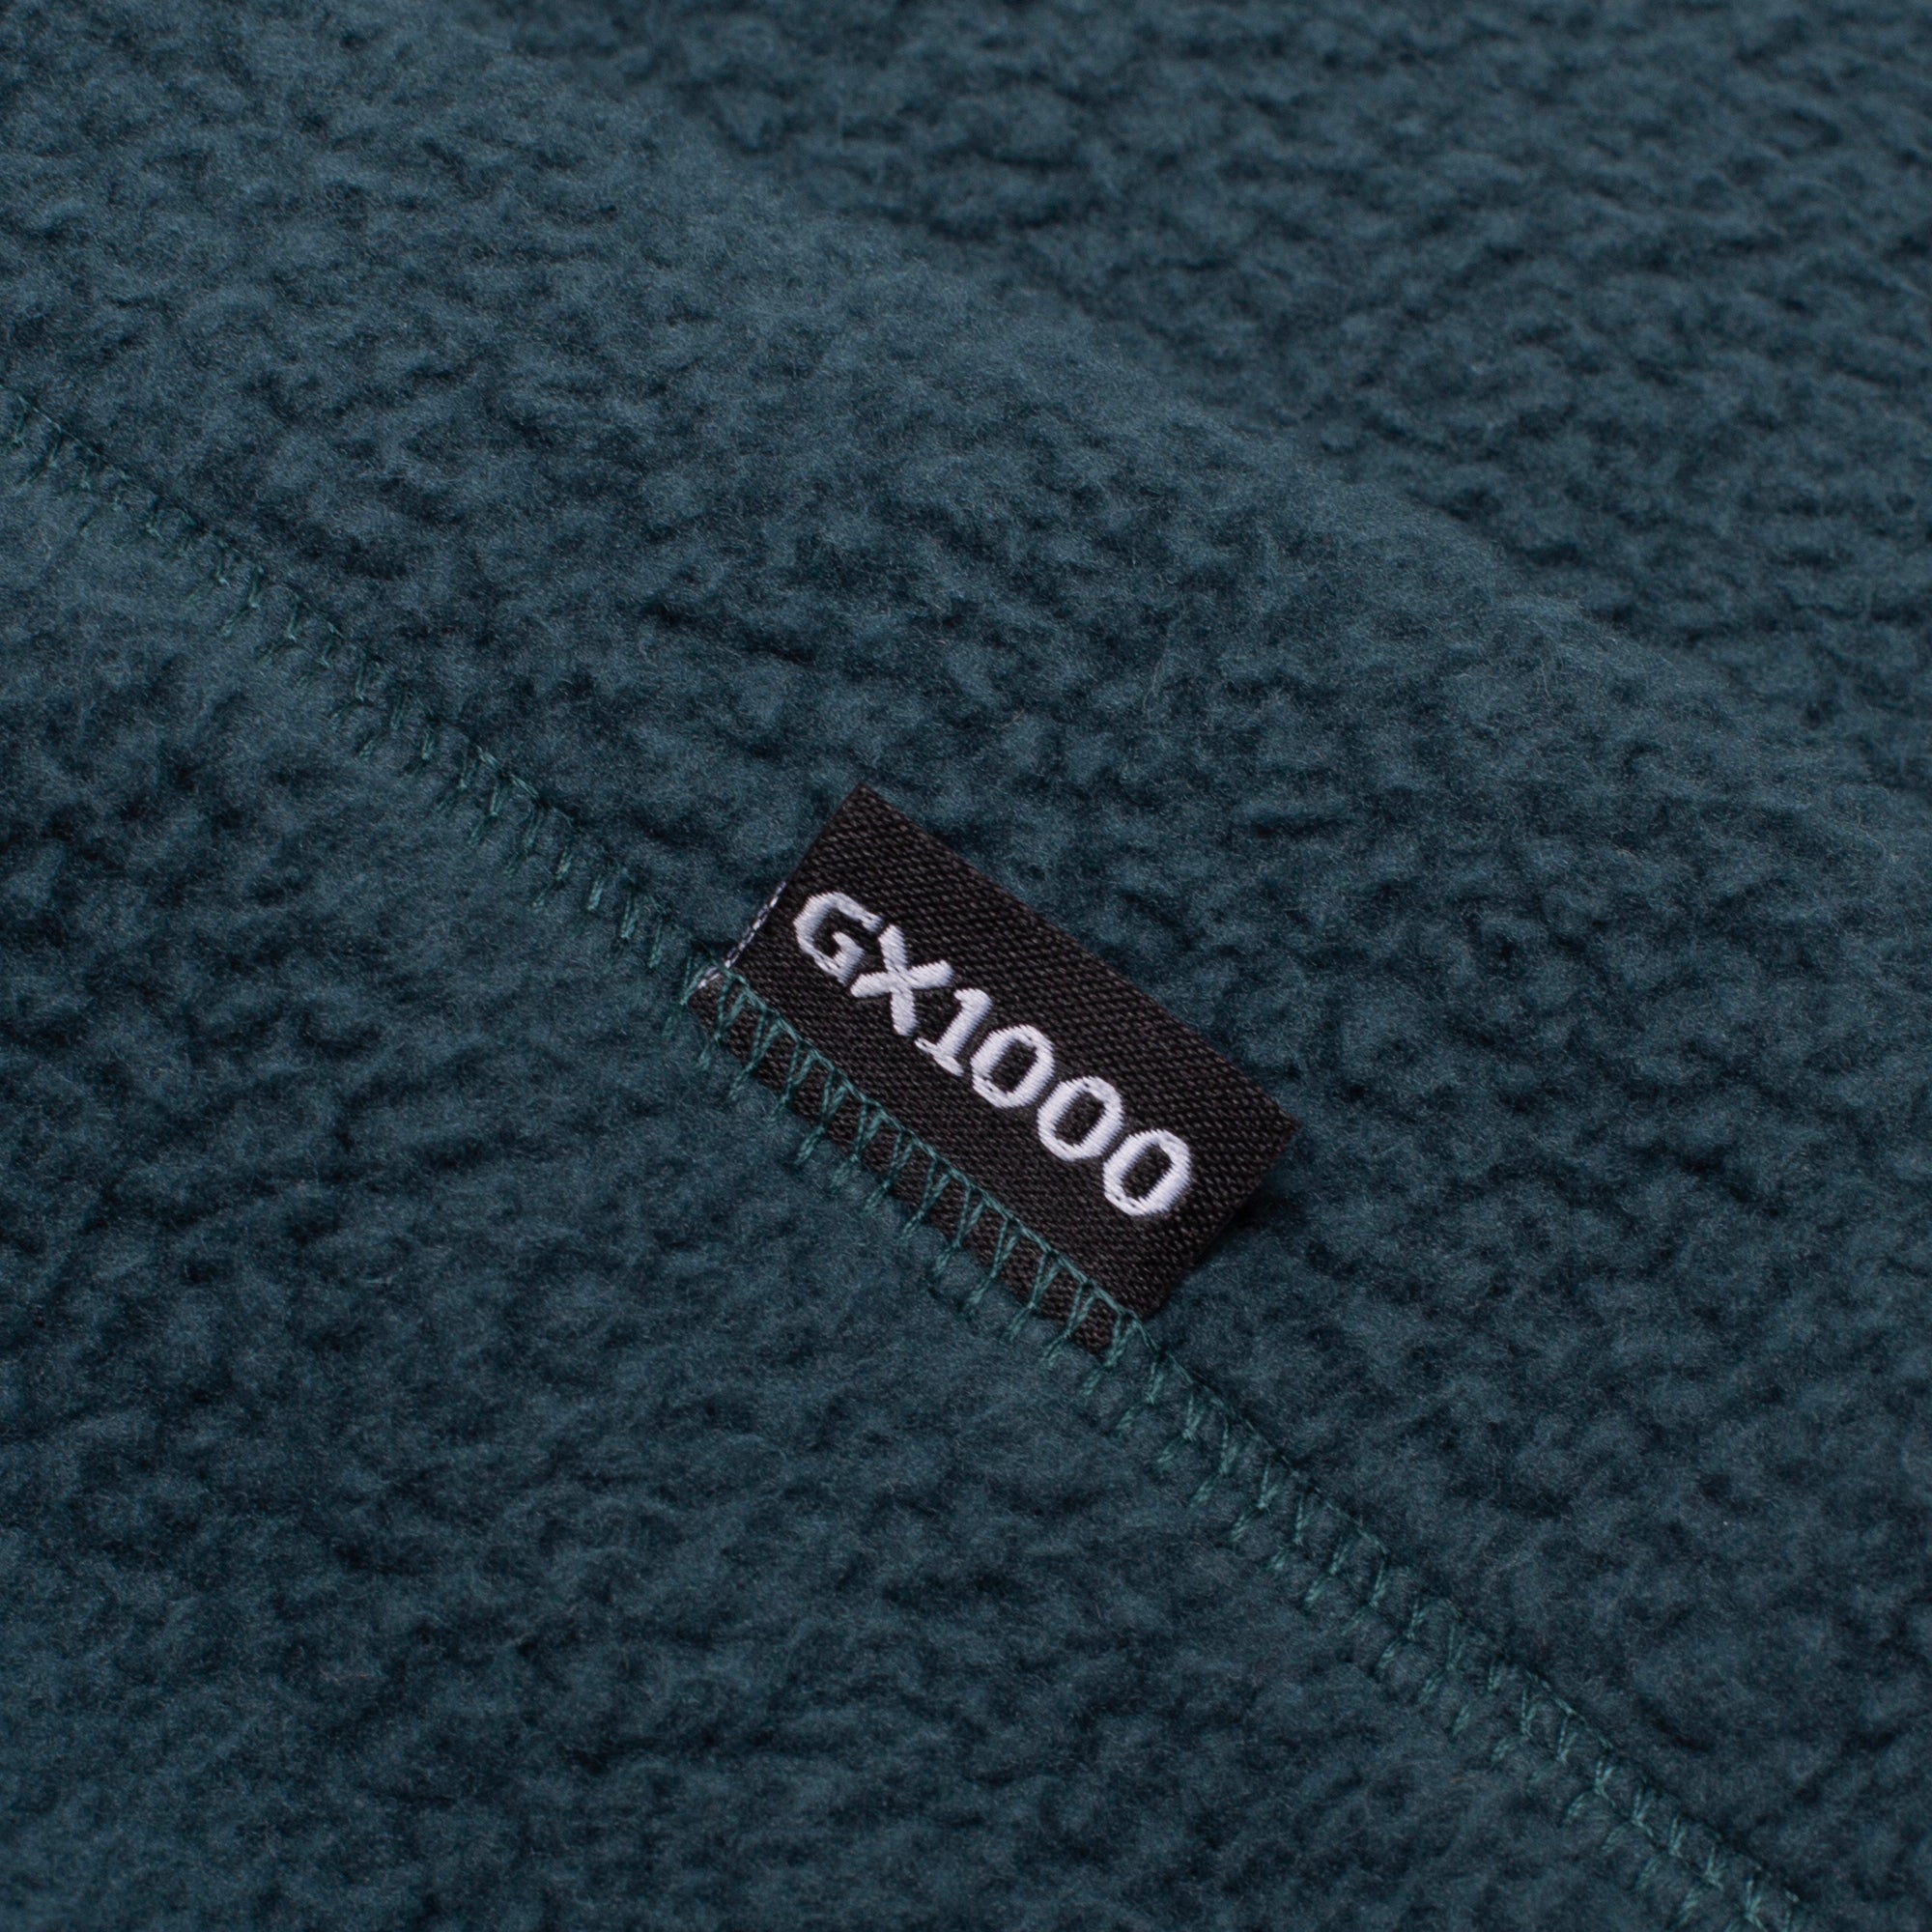 GX1000 - Polar Hooded Fleece "Dark Green"